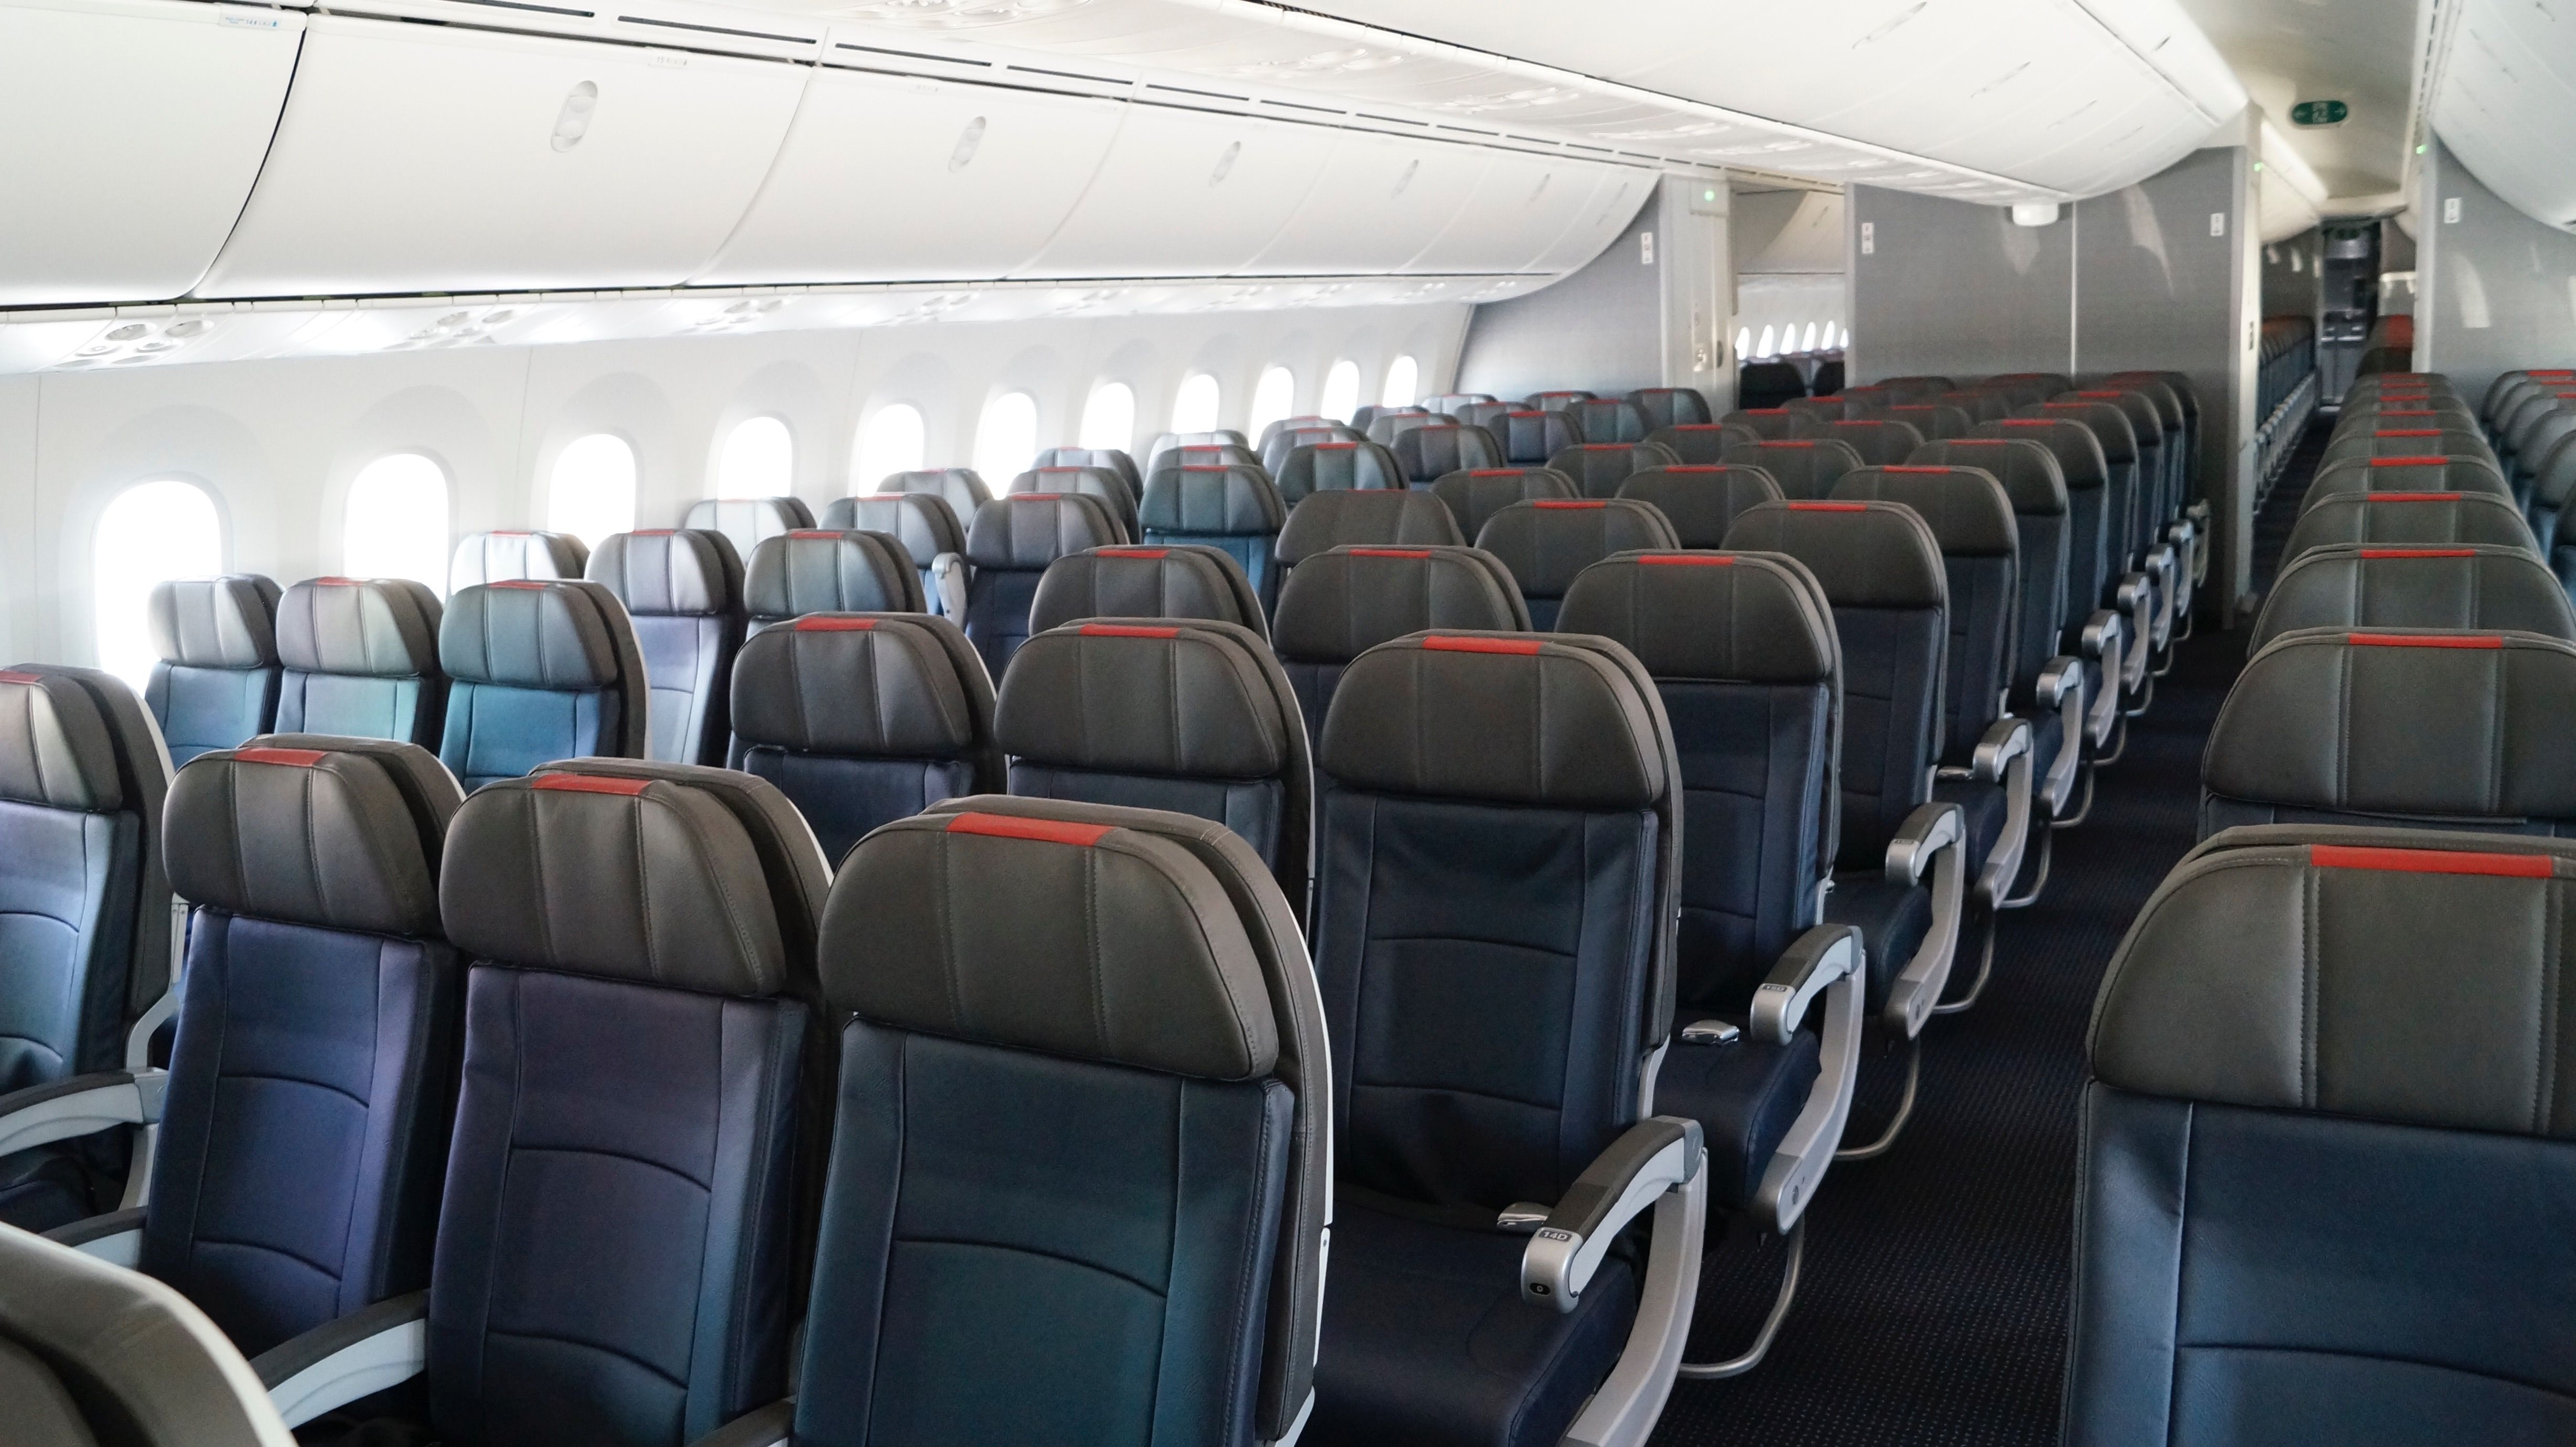 First Look: Inside American's 787 9 Dreamliner